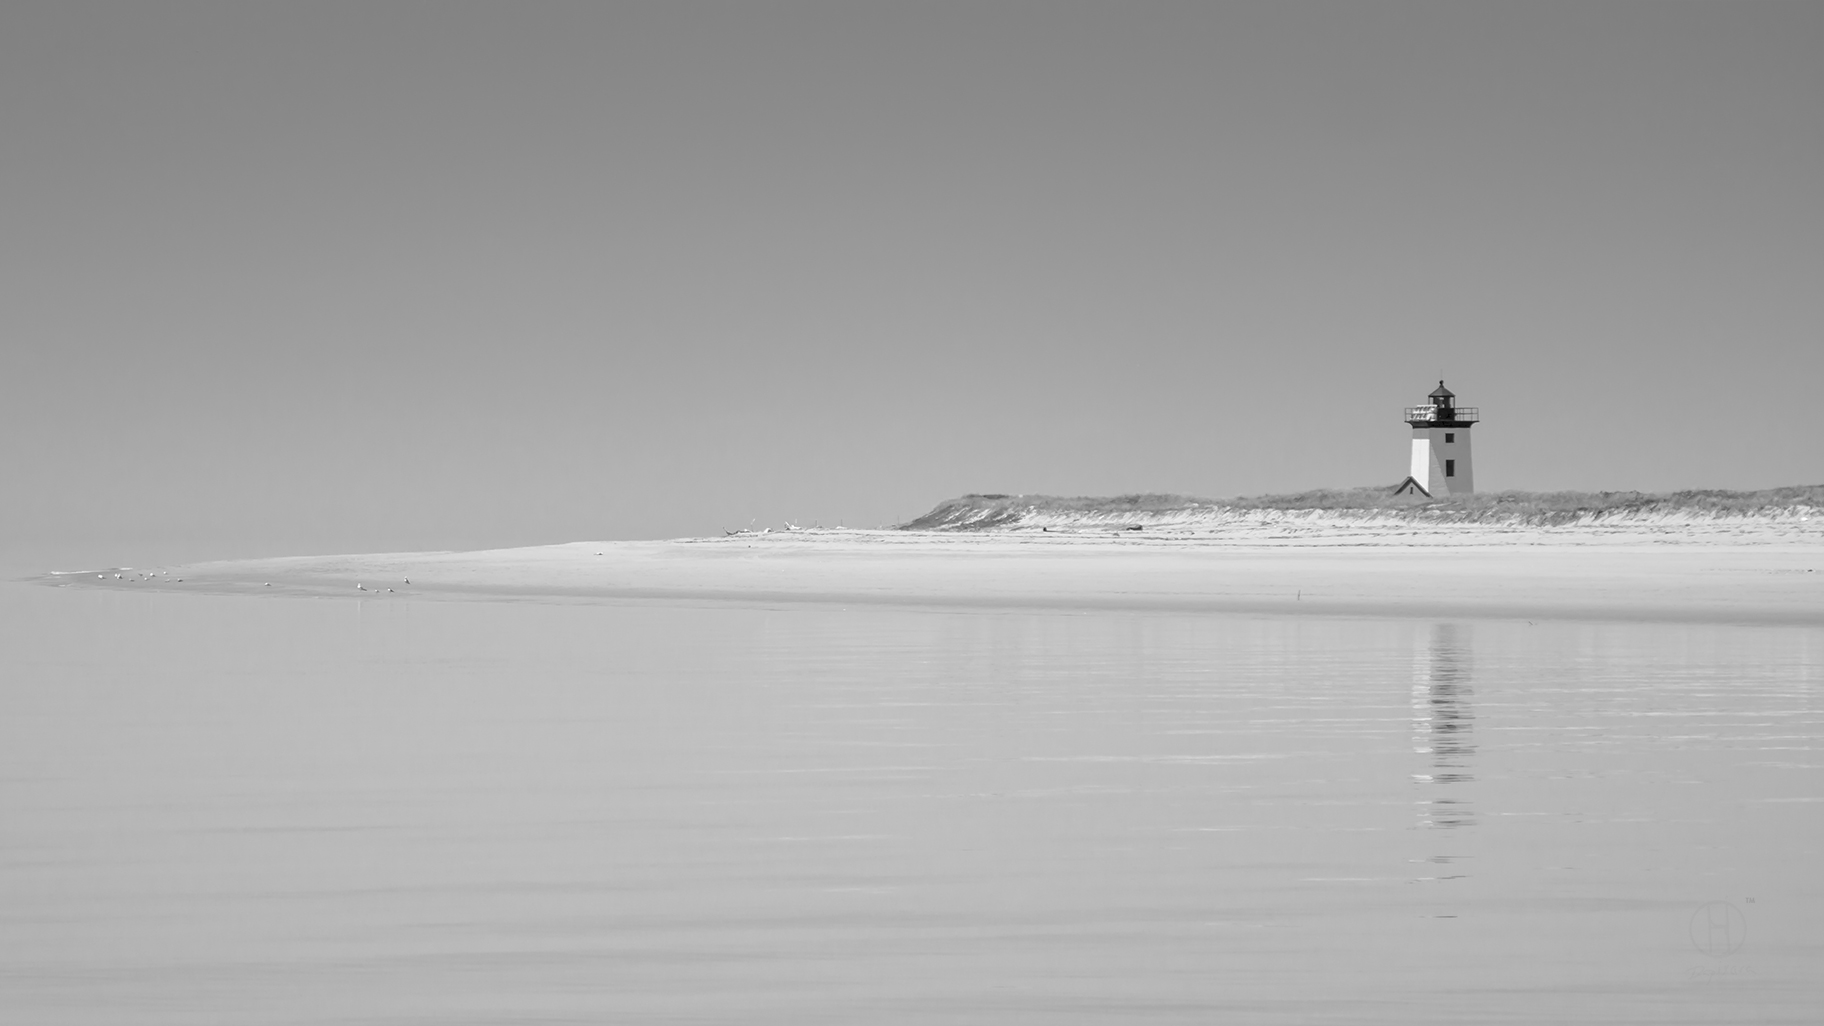 Black and White Photography, Isolated Lighthouse, beach photographer Dapixara